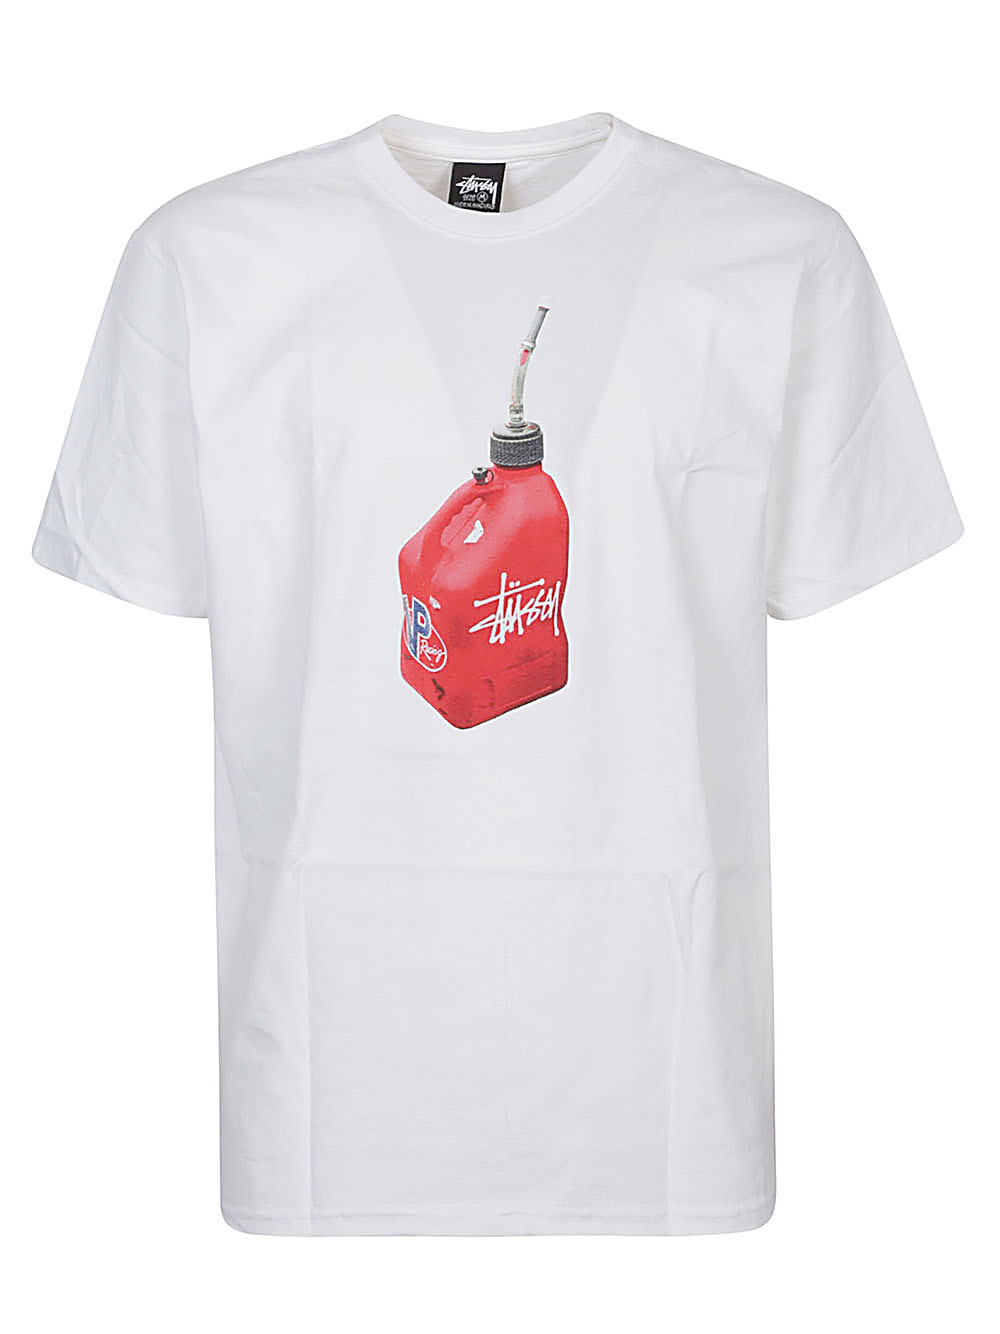 Stussy STUSSY- Printed Cotton T-shirt